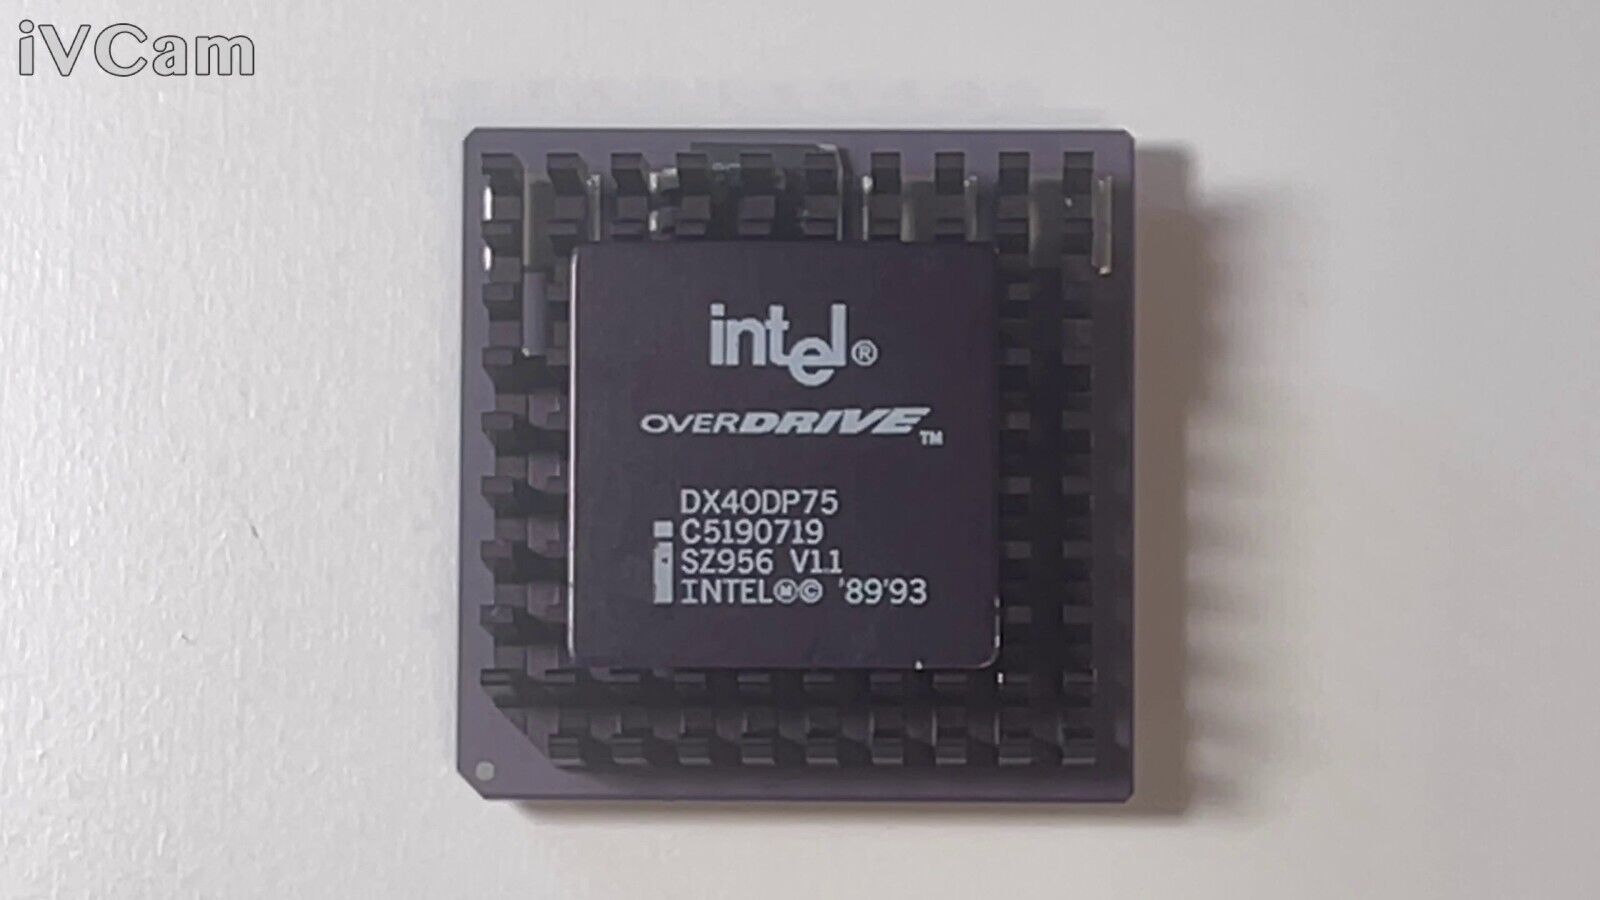 Intel overdrive CPU DX40DP75 '89 '93